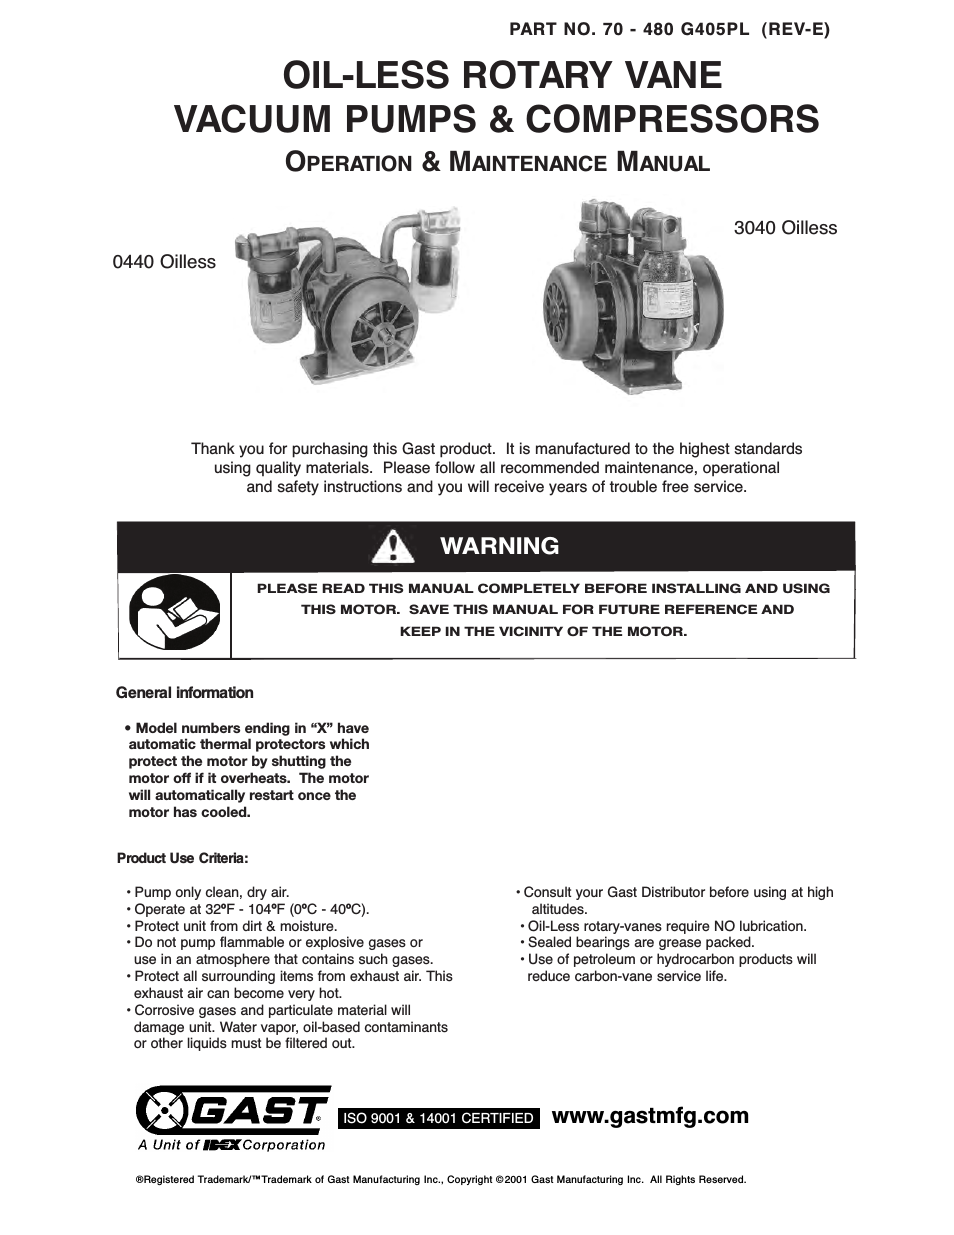 0440 Series Oilless Vacuum Pumps and Comressors